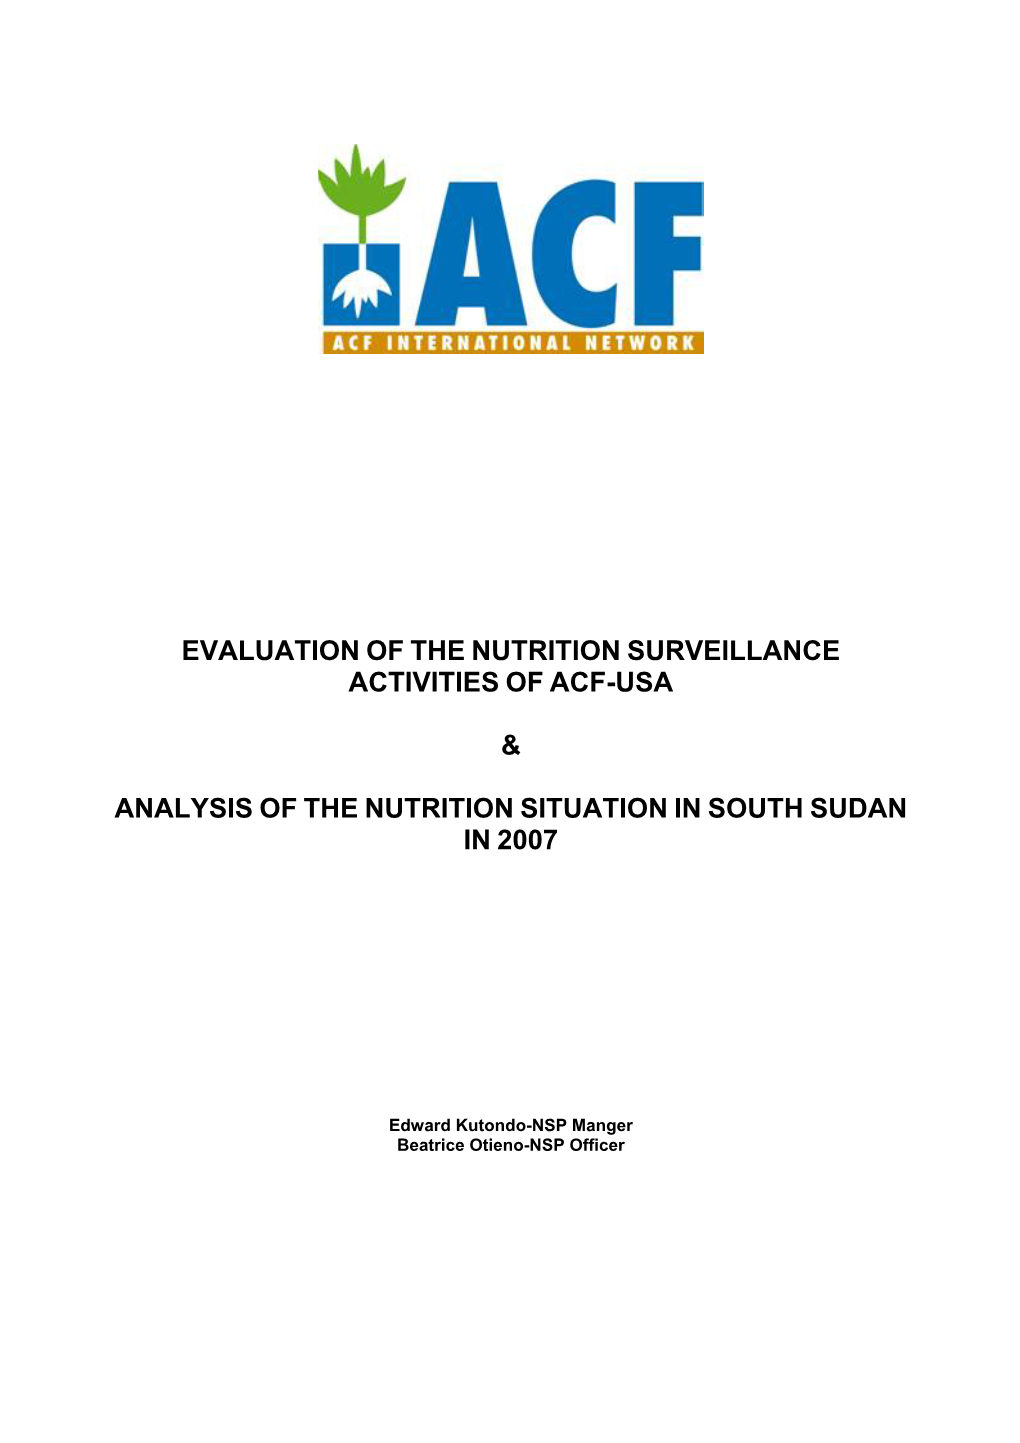 Evaluation of ACF-USA Nutrition Surveillance Activities 2007